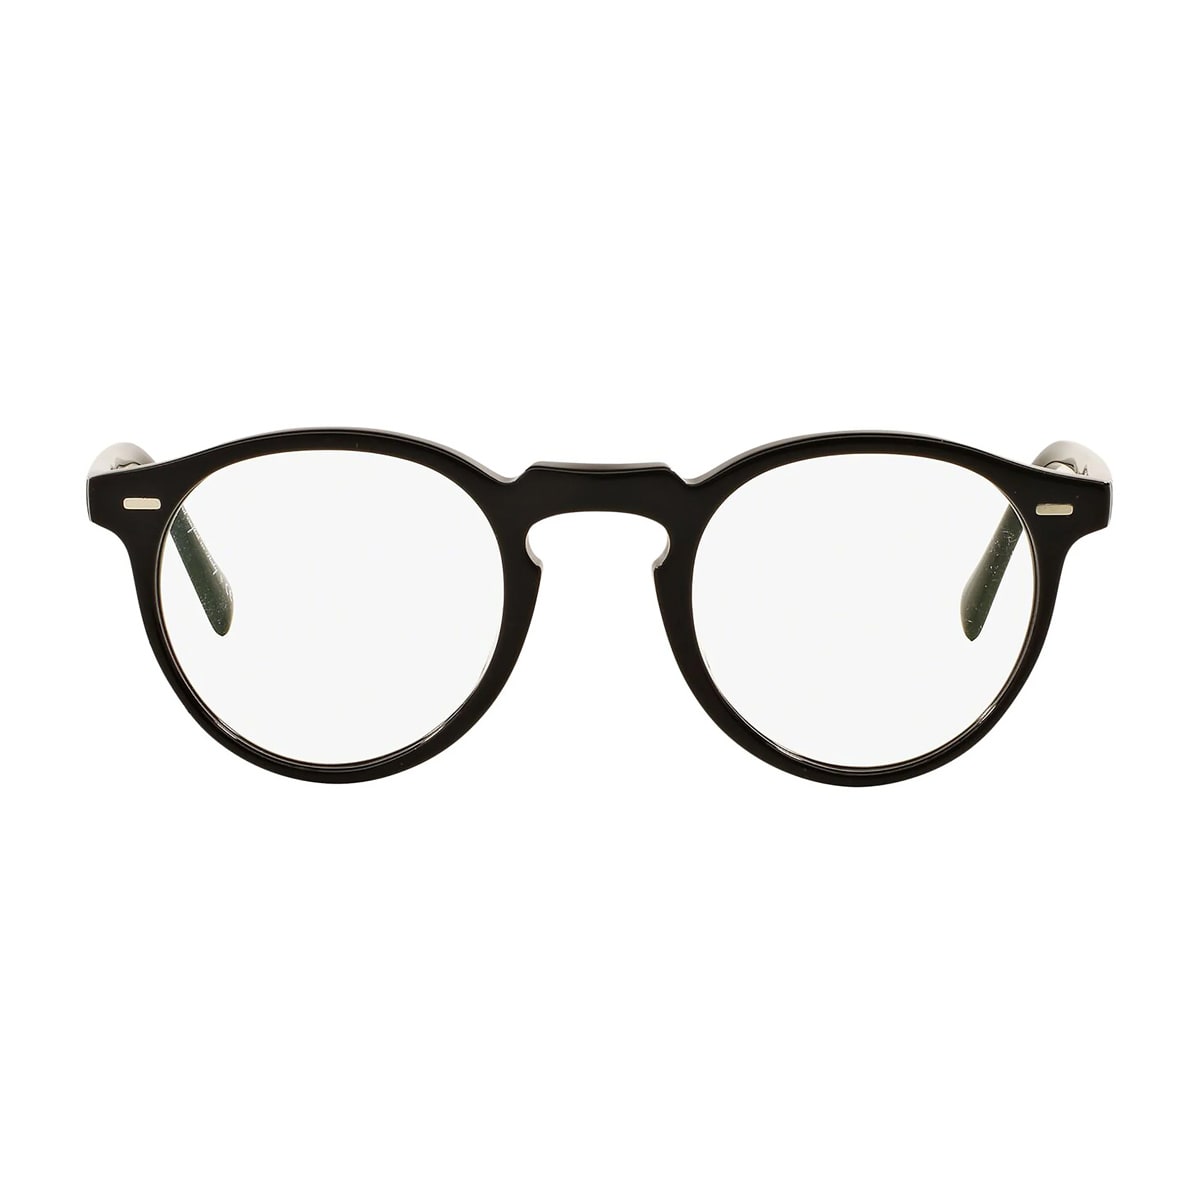 Ov5186 - Gregory Peck 1005 Glasses